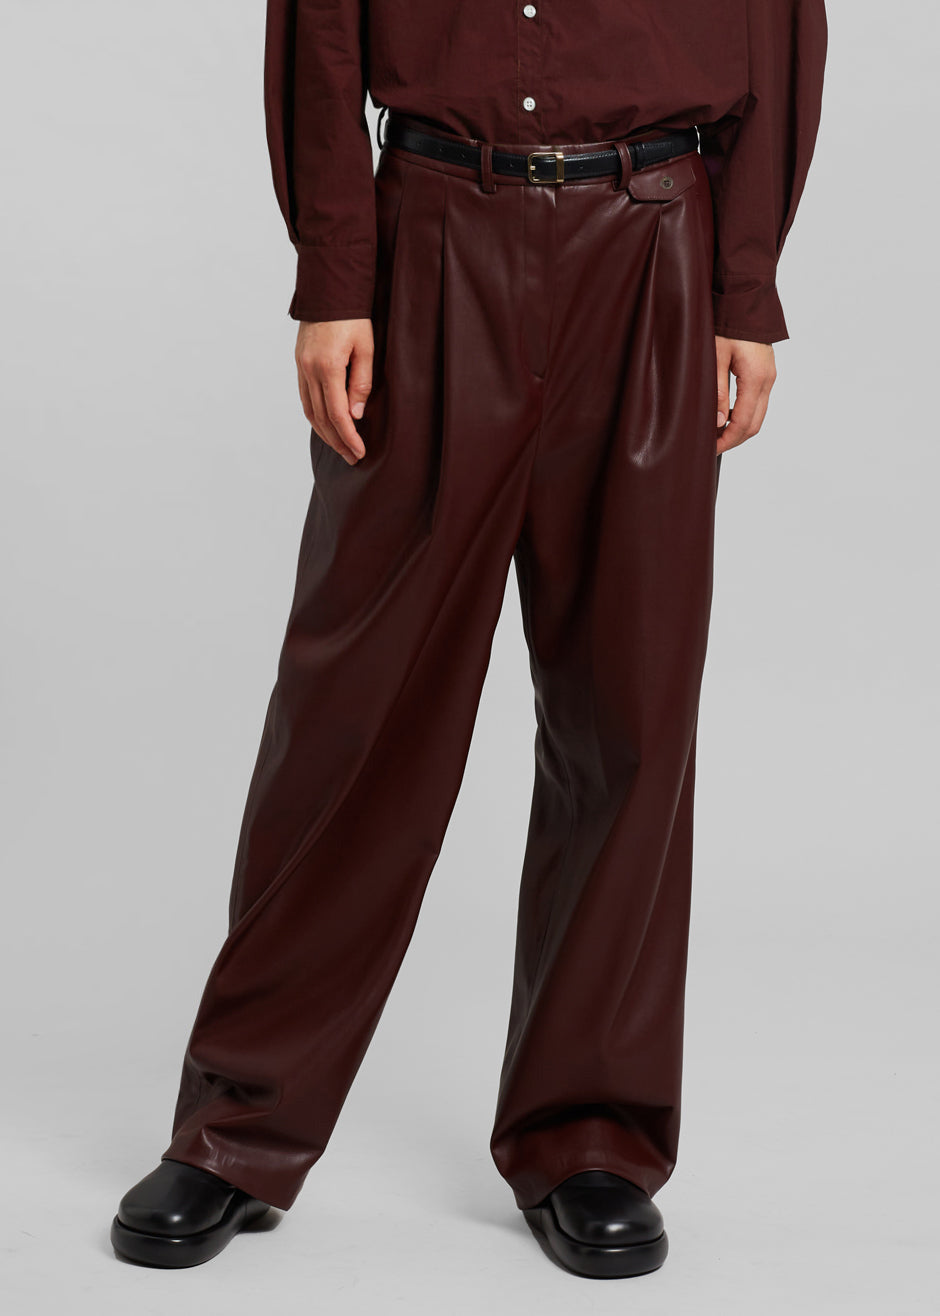 Burgundy Leather Pants Women | Wide Leg Leather Korean Pants - Leather Pants  Women - Aliexpress